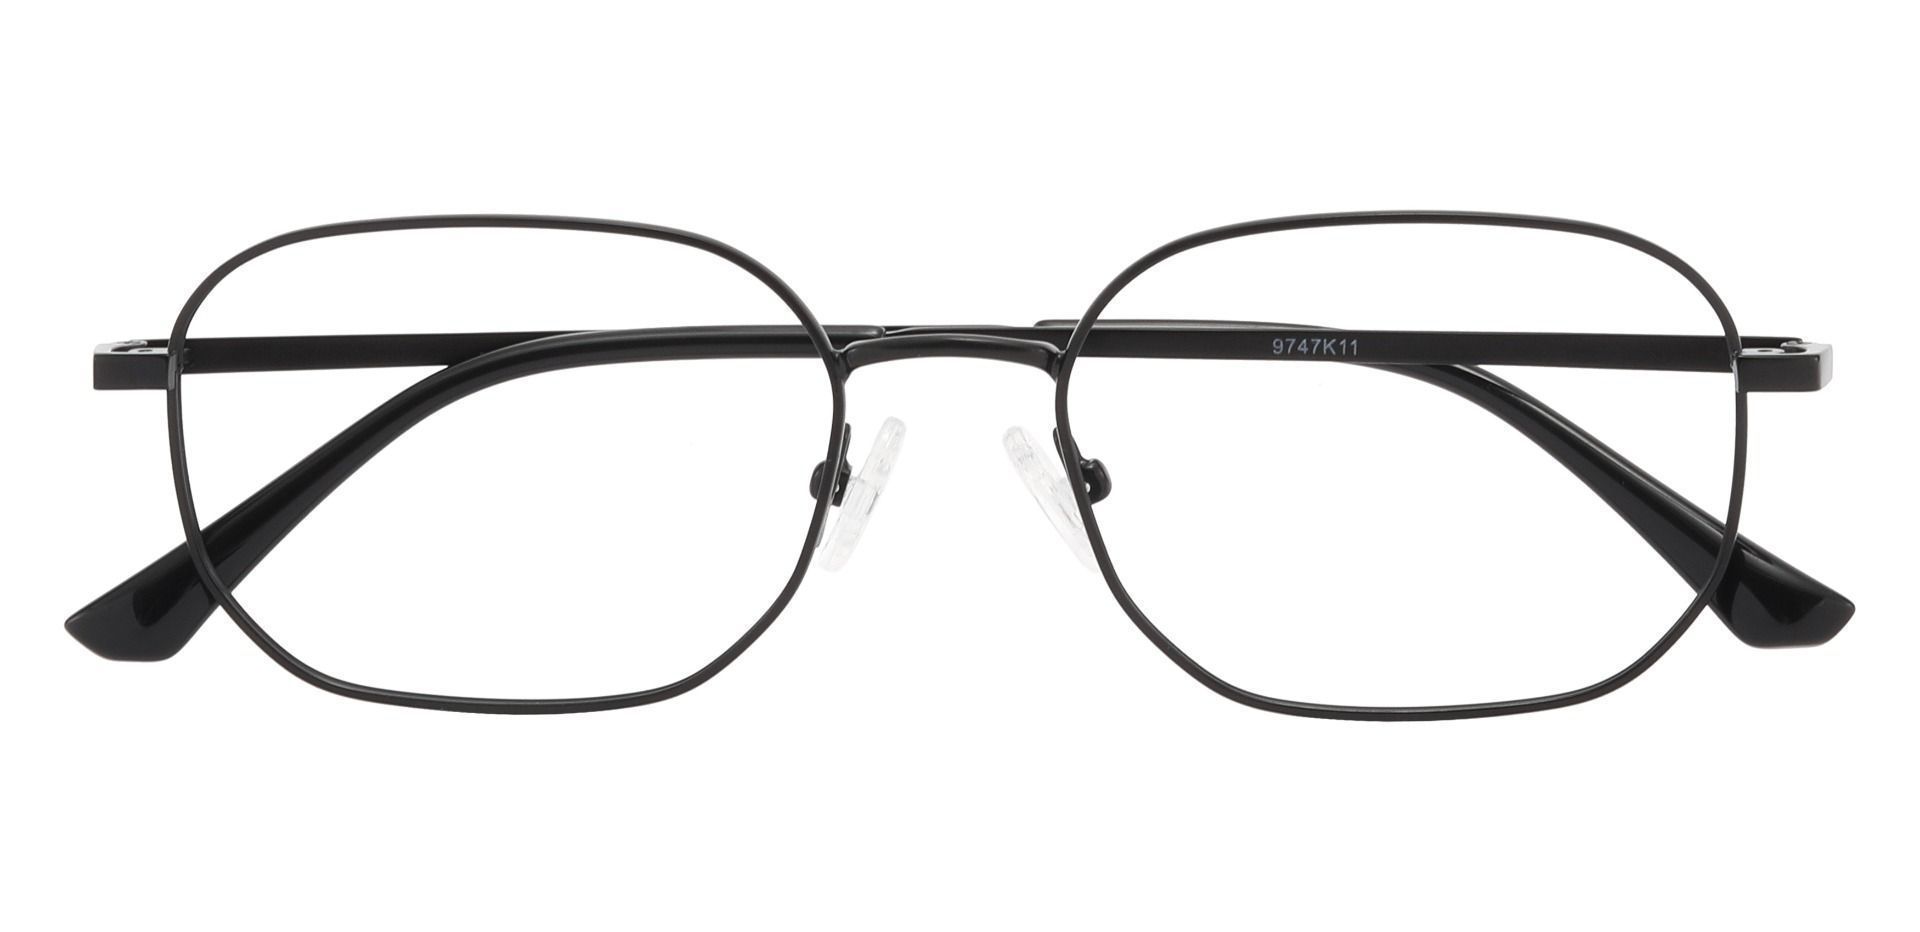 Euclid Geometric Eyeglasses Frame - Black